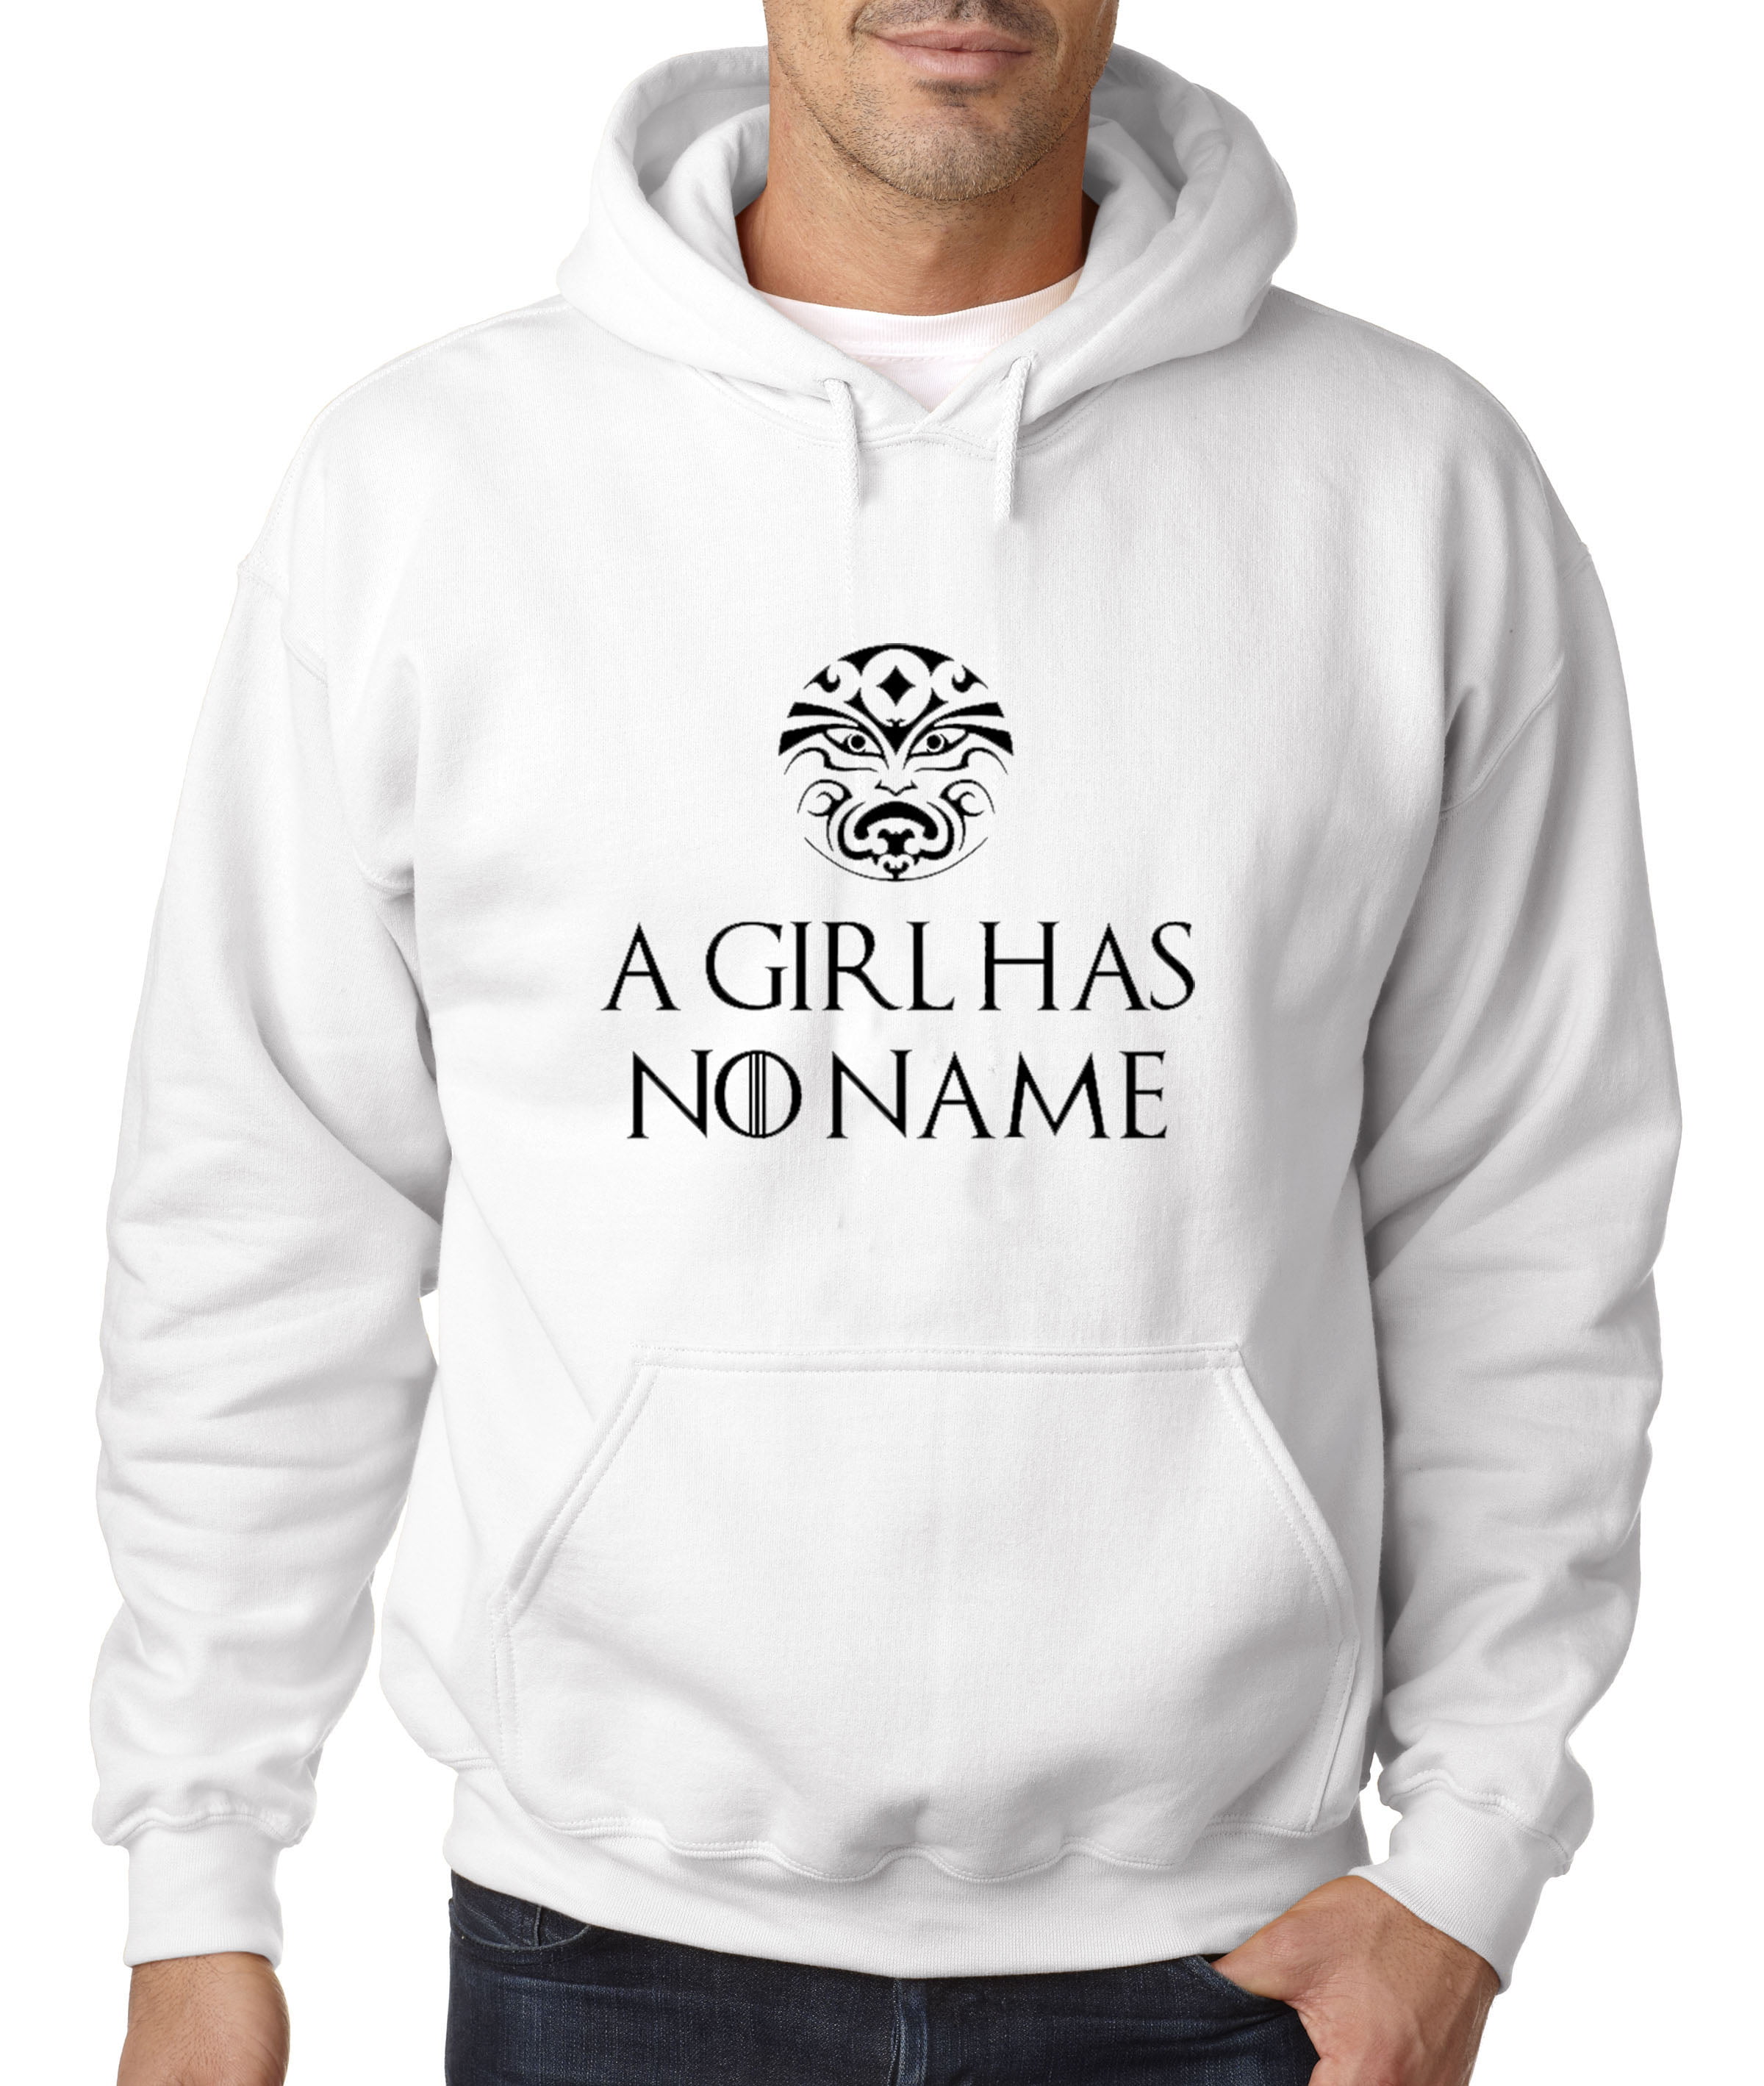 Game of Thrones "A Girl Has No Name" Unisex Hooded Sweatshirt 